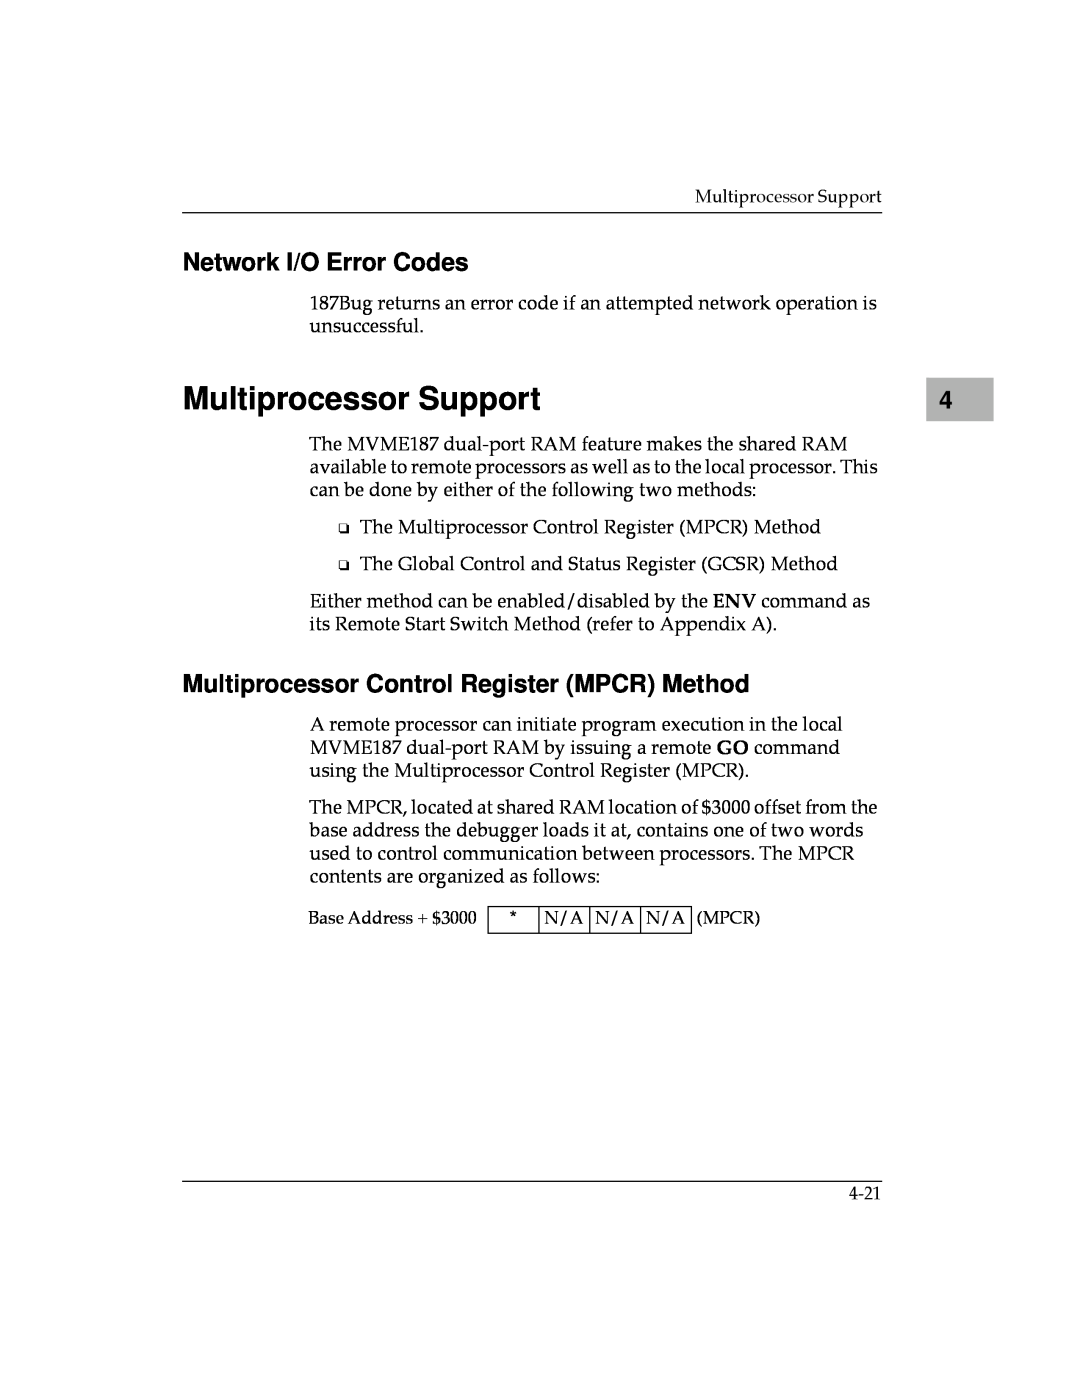 Motorola MVME187 manual Multiprocessor Support, Network I/O Error Codes, Multiprocessor Control Register MPCR Method 